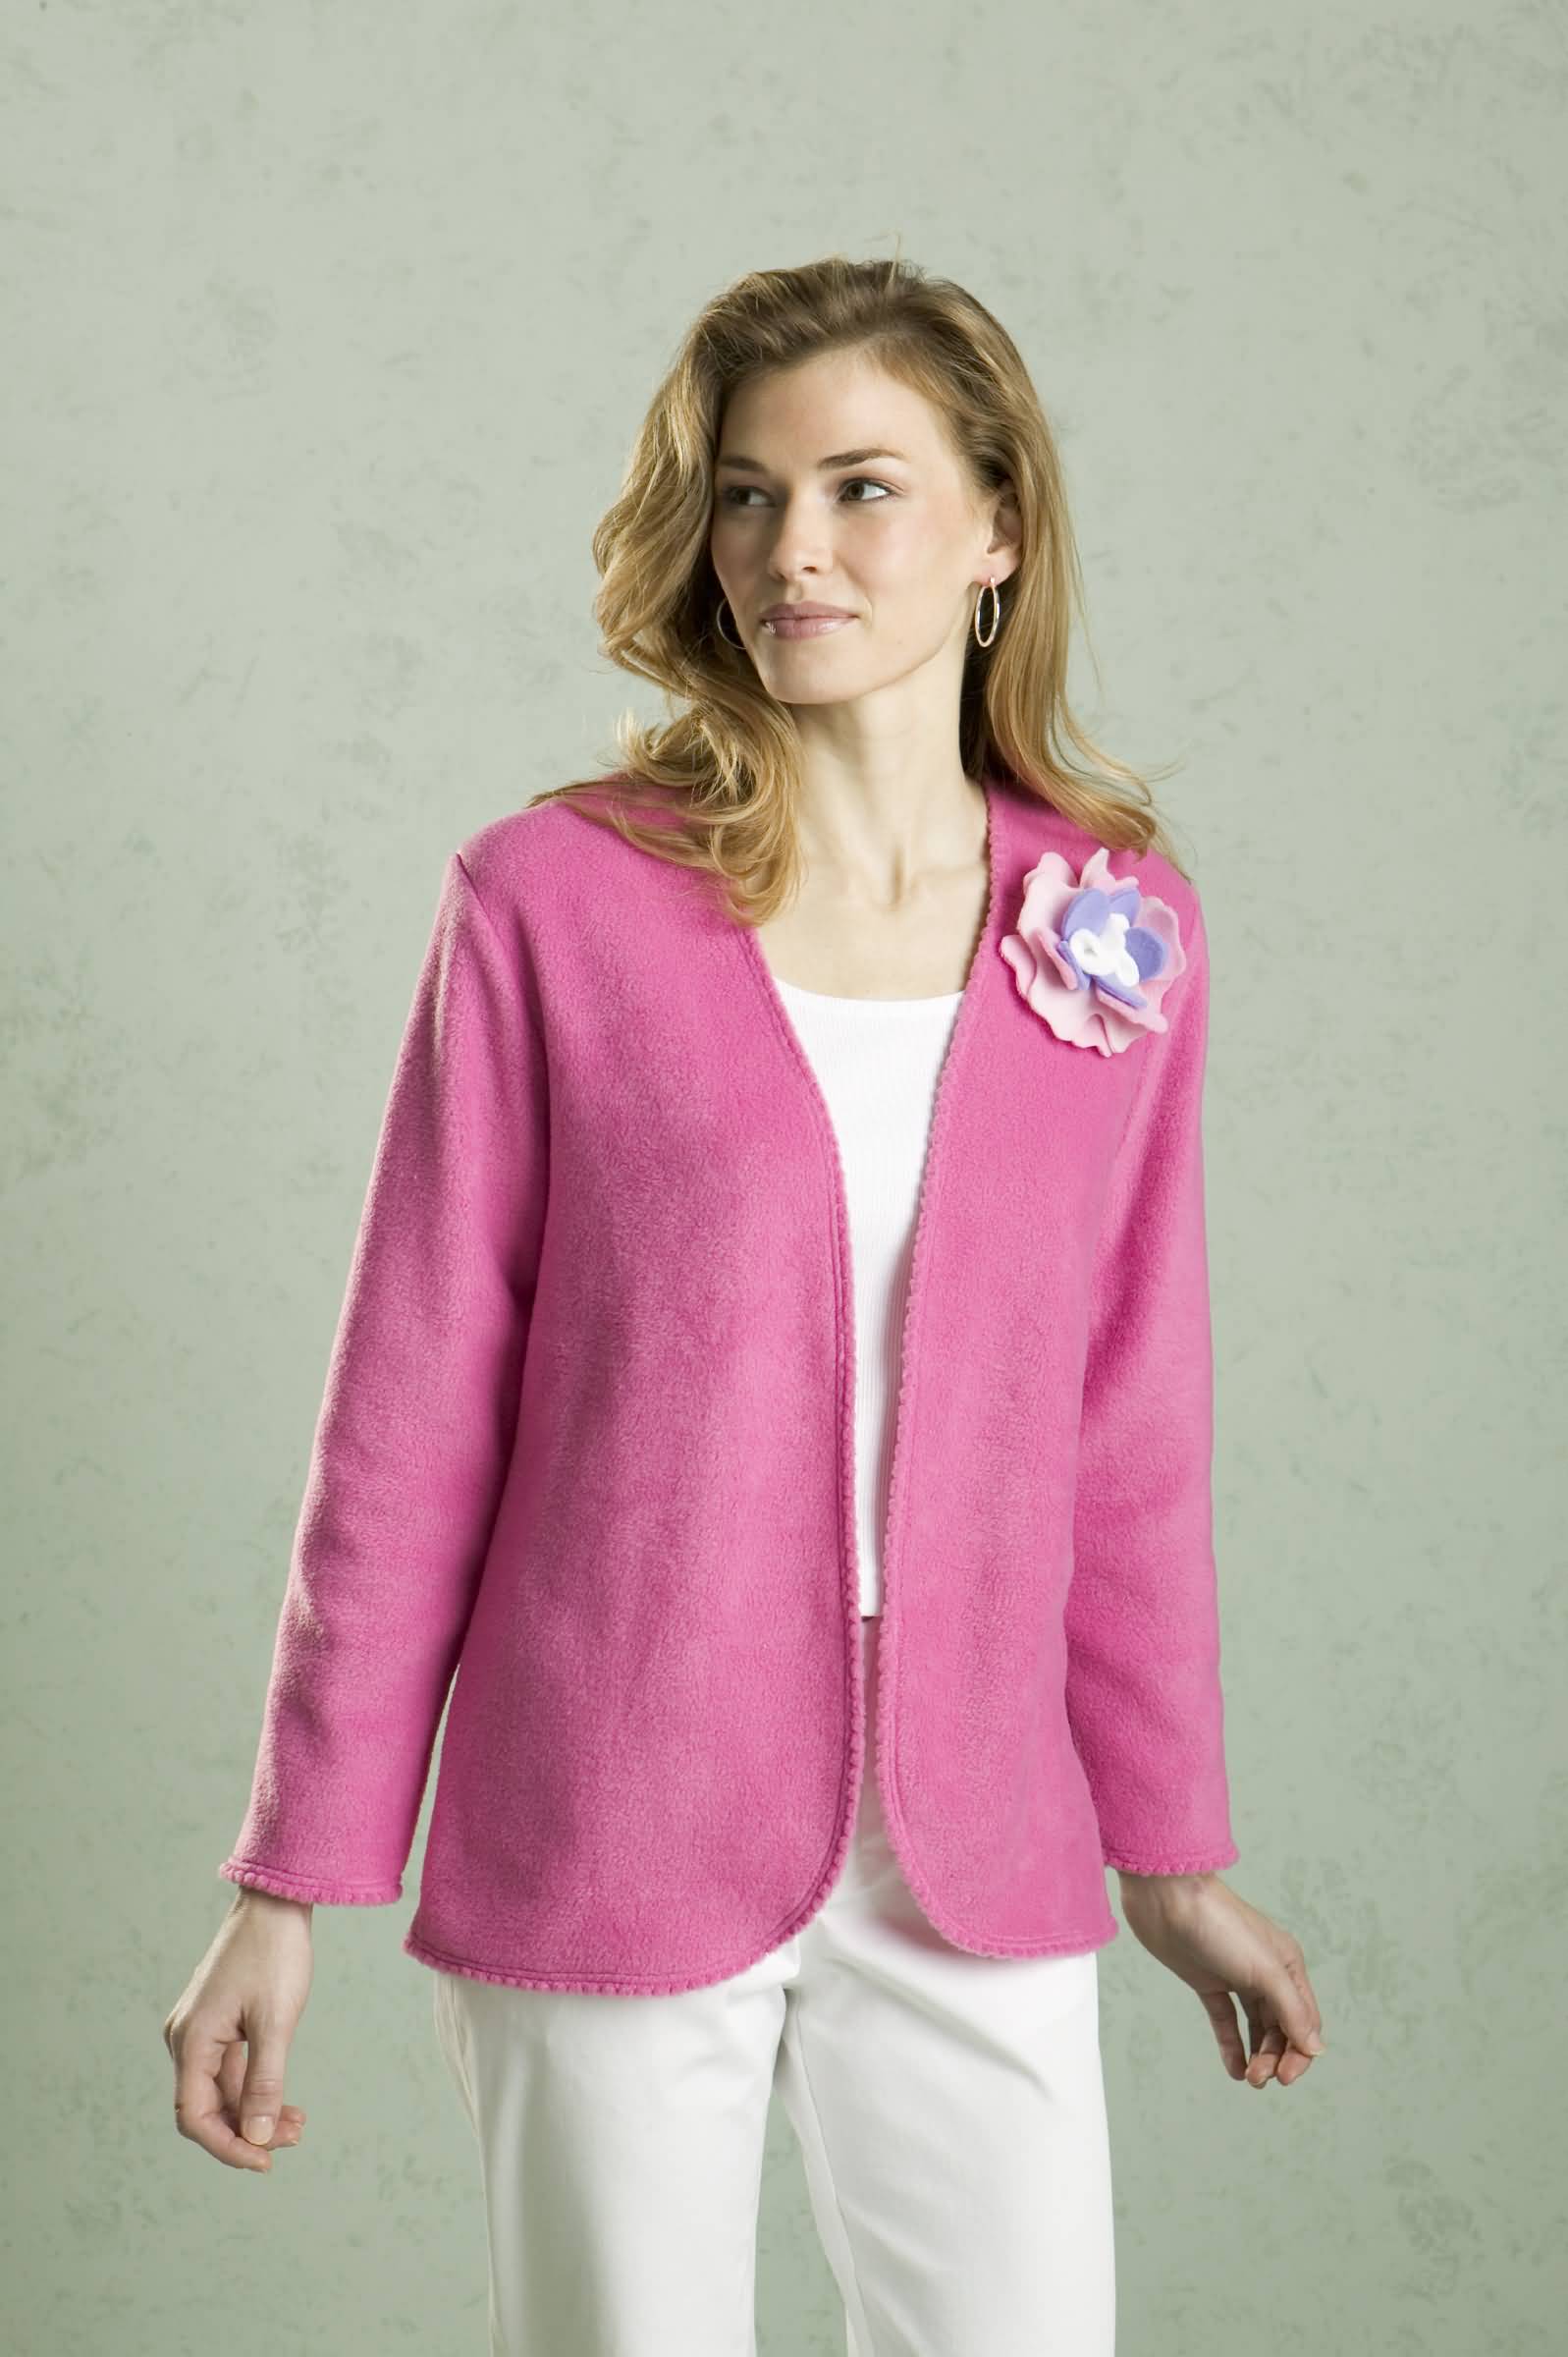 Kwik Sew New Uncut Pattern # 3313 Misses Sizes XS-XL Jackets & Flowers 